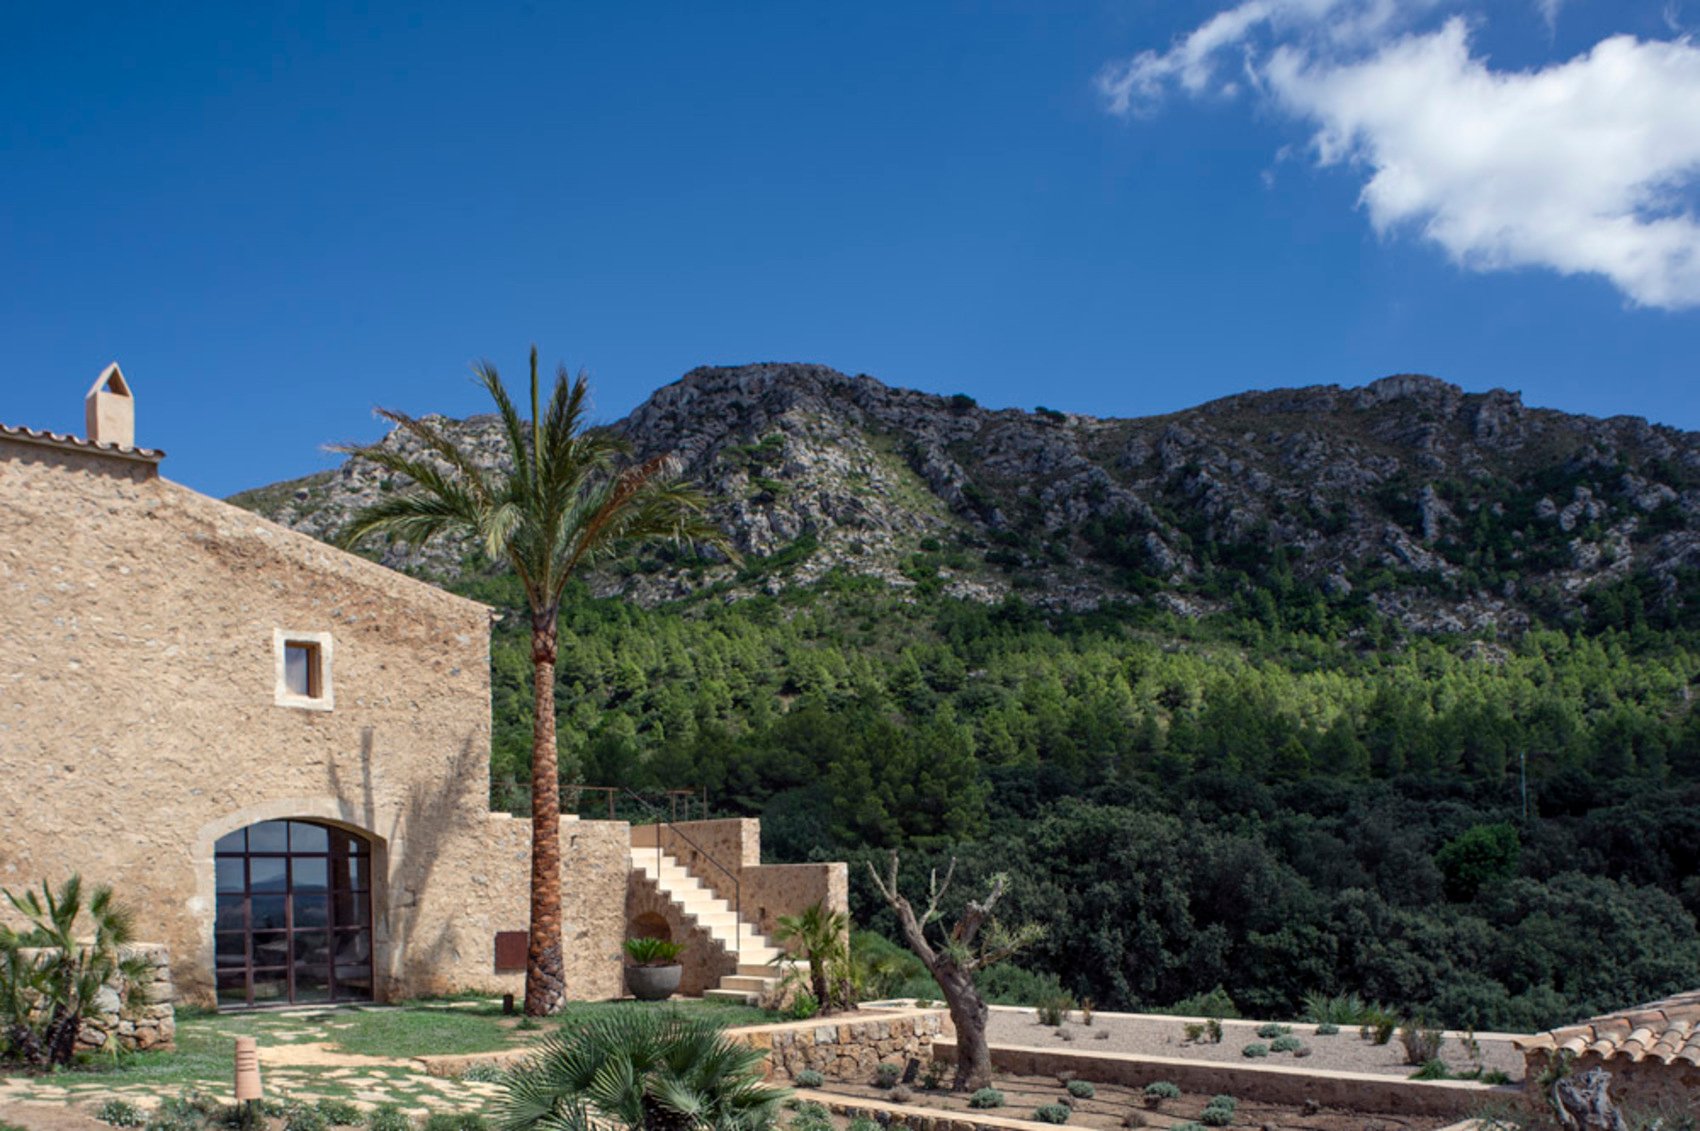 Best boutique hotel with pool, spa, restaurant 5* Mallorca Spain - Es Raco d'Arta - exterior